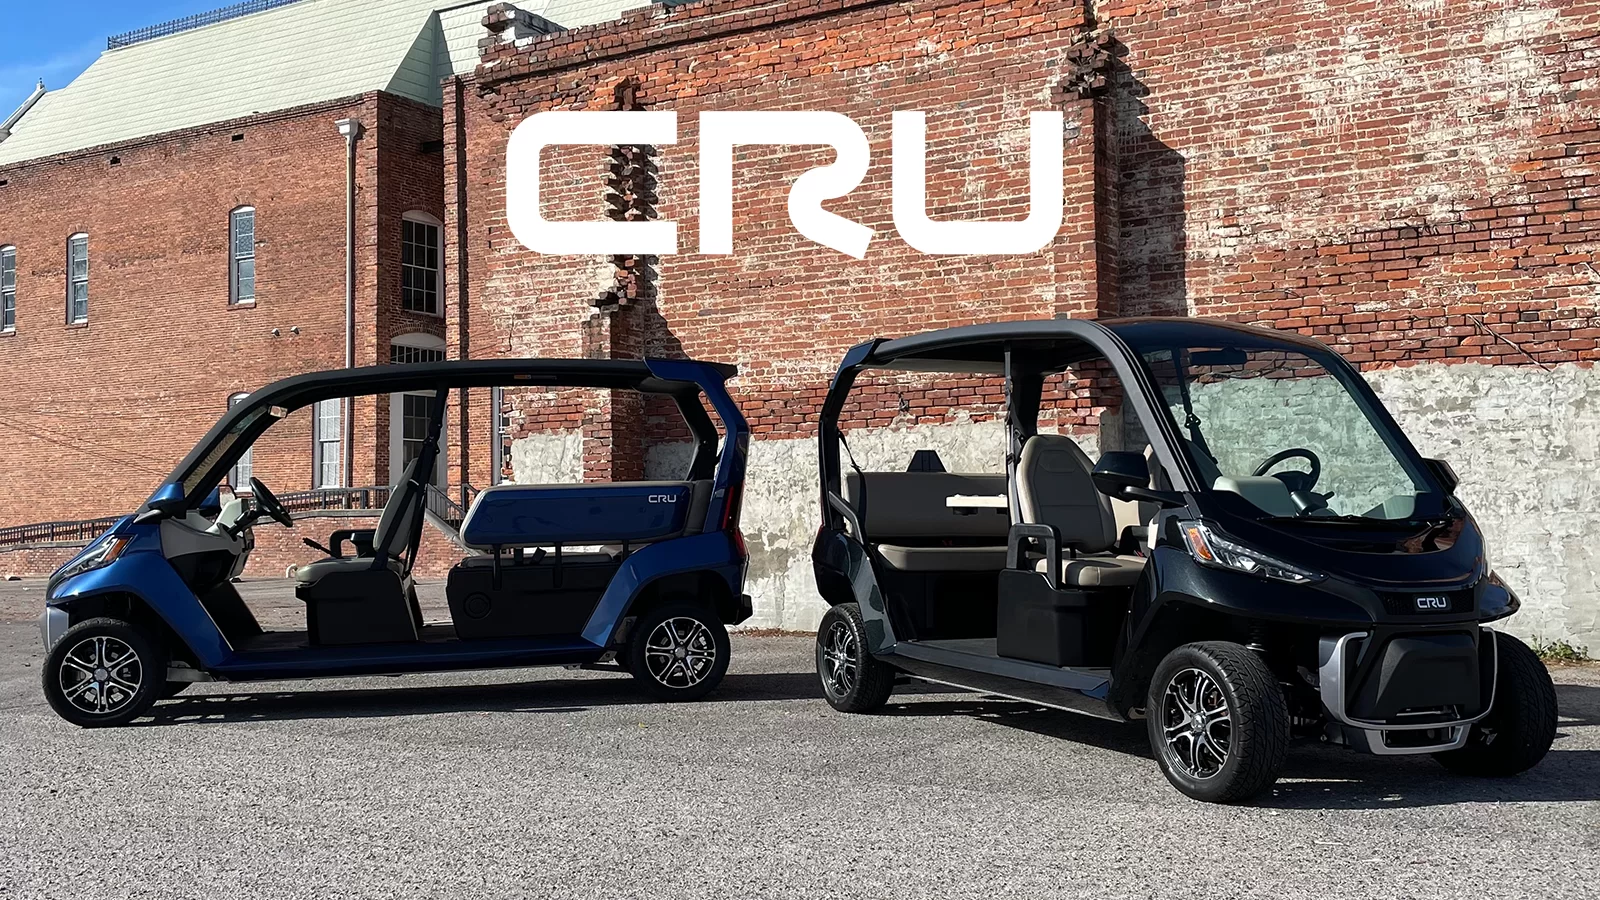 Club Car CRU